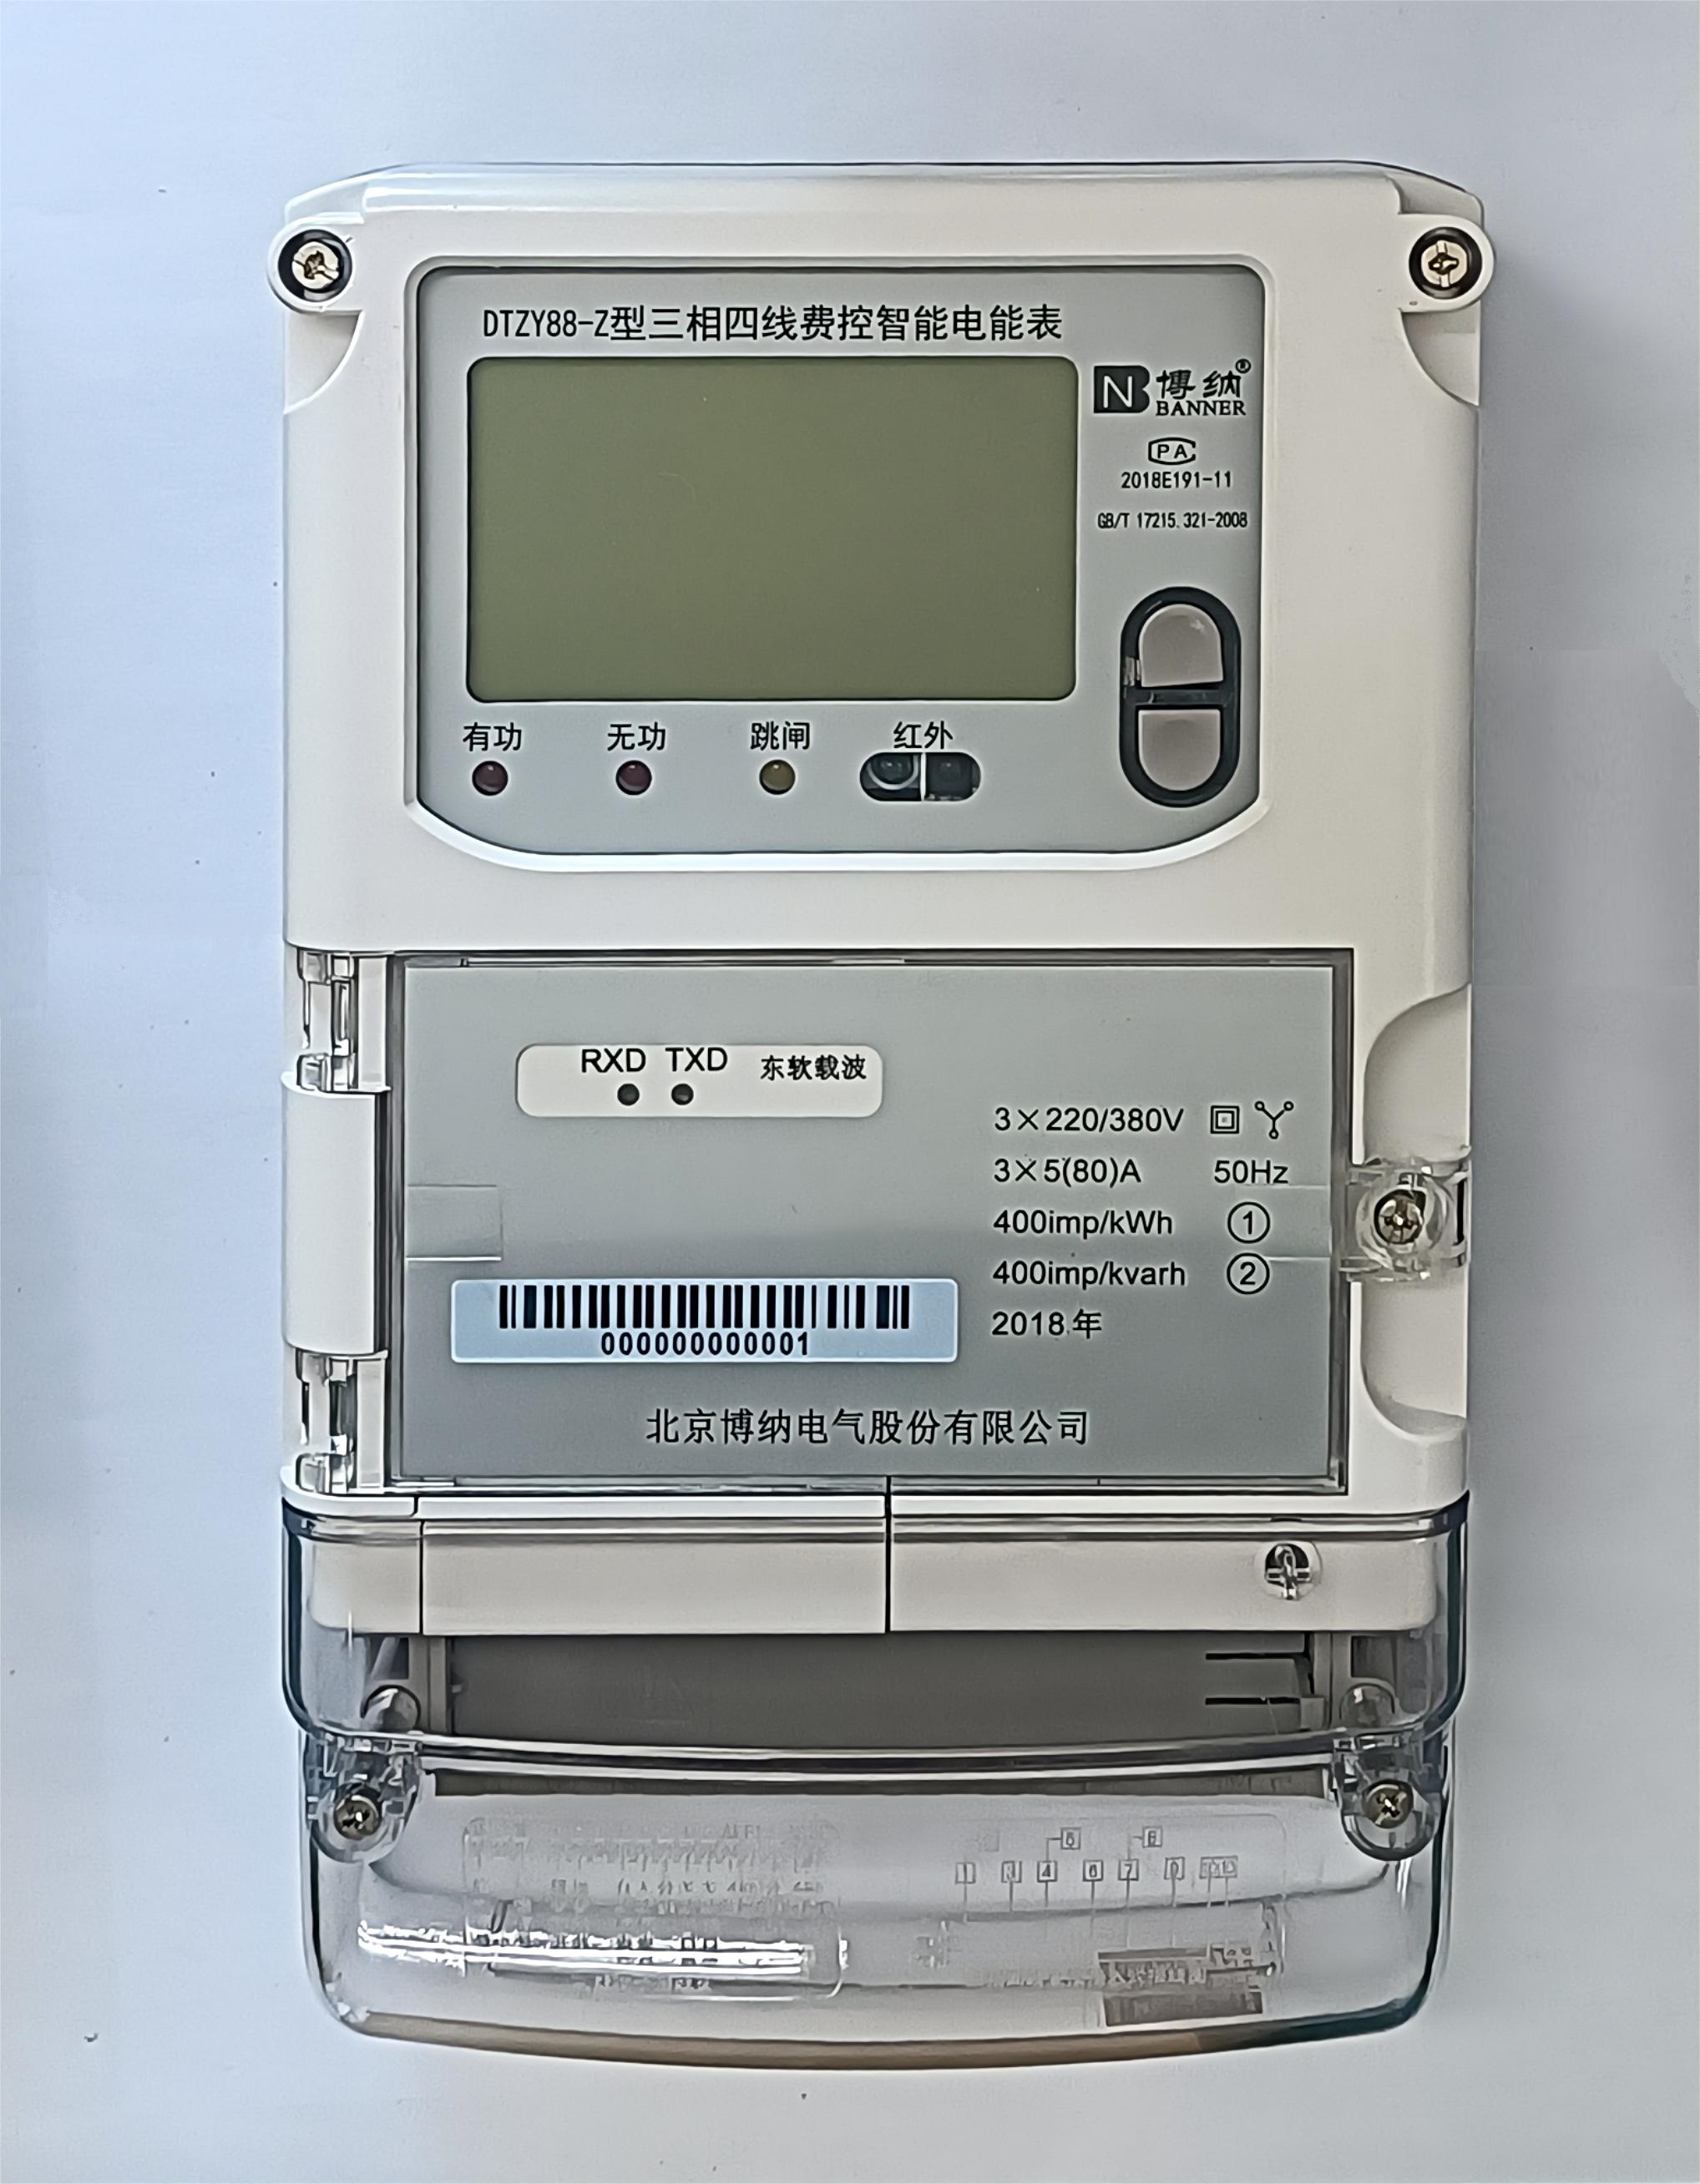 DTZY88-Z 型三相多功能电能表(内置载波)